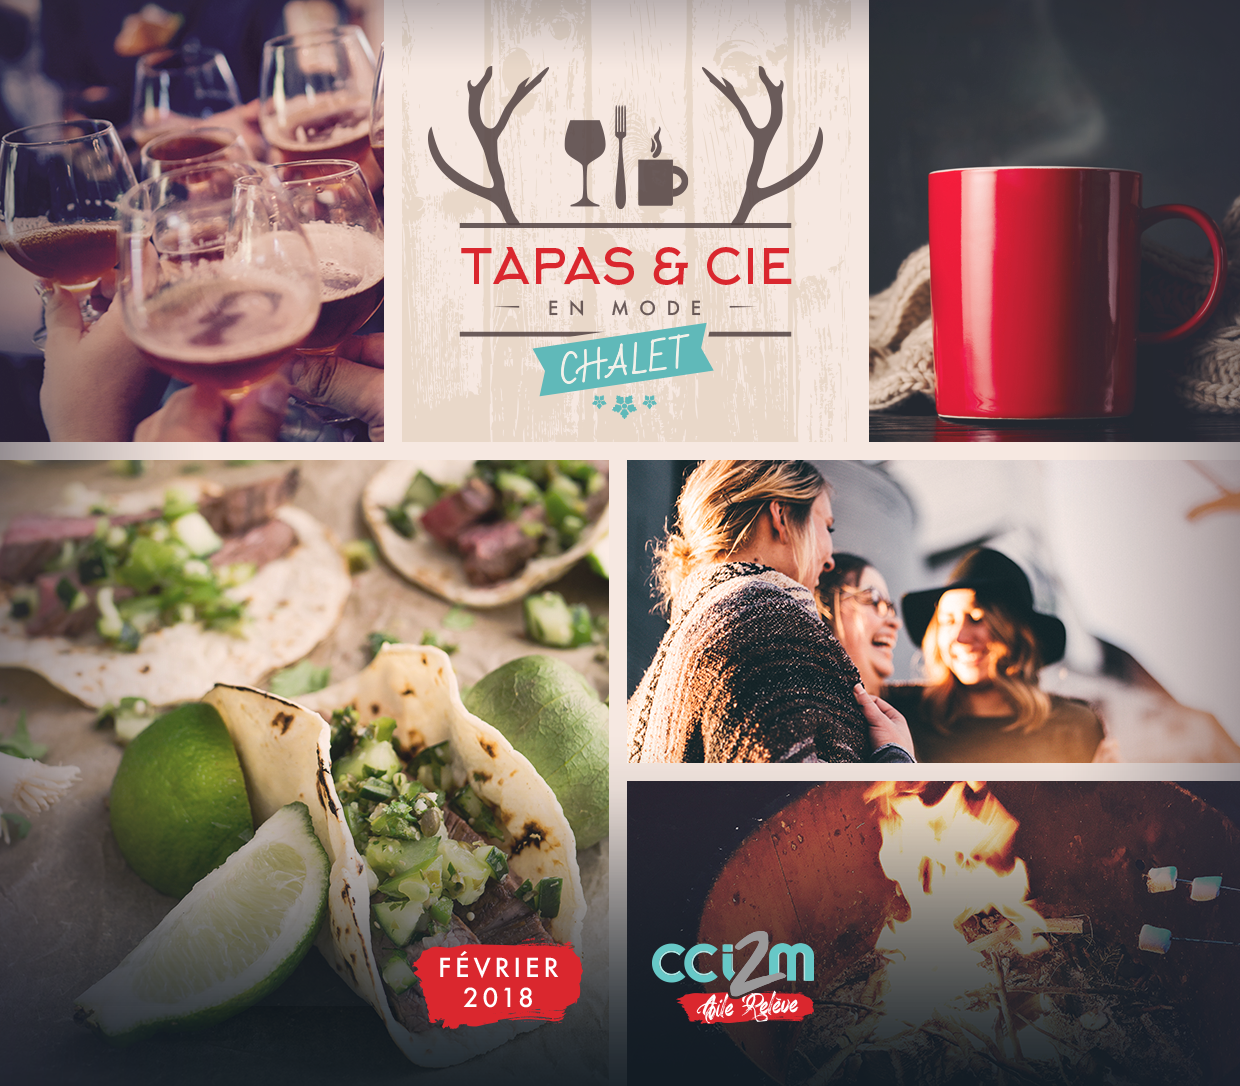 Tapas & Cie – CCi2M – Brand image